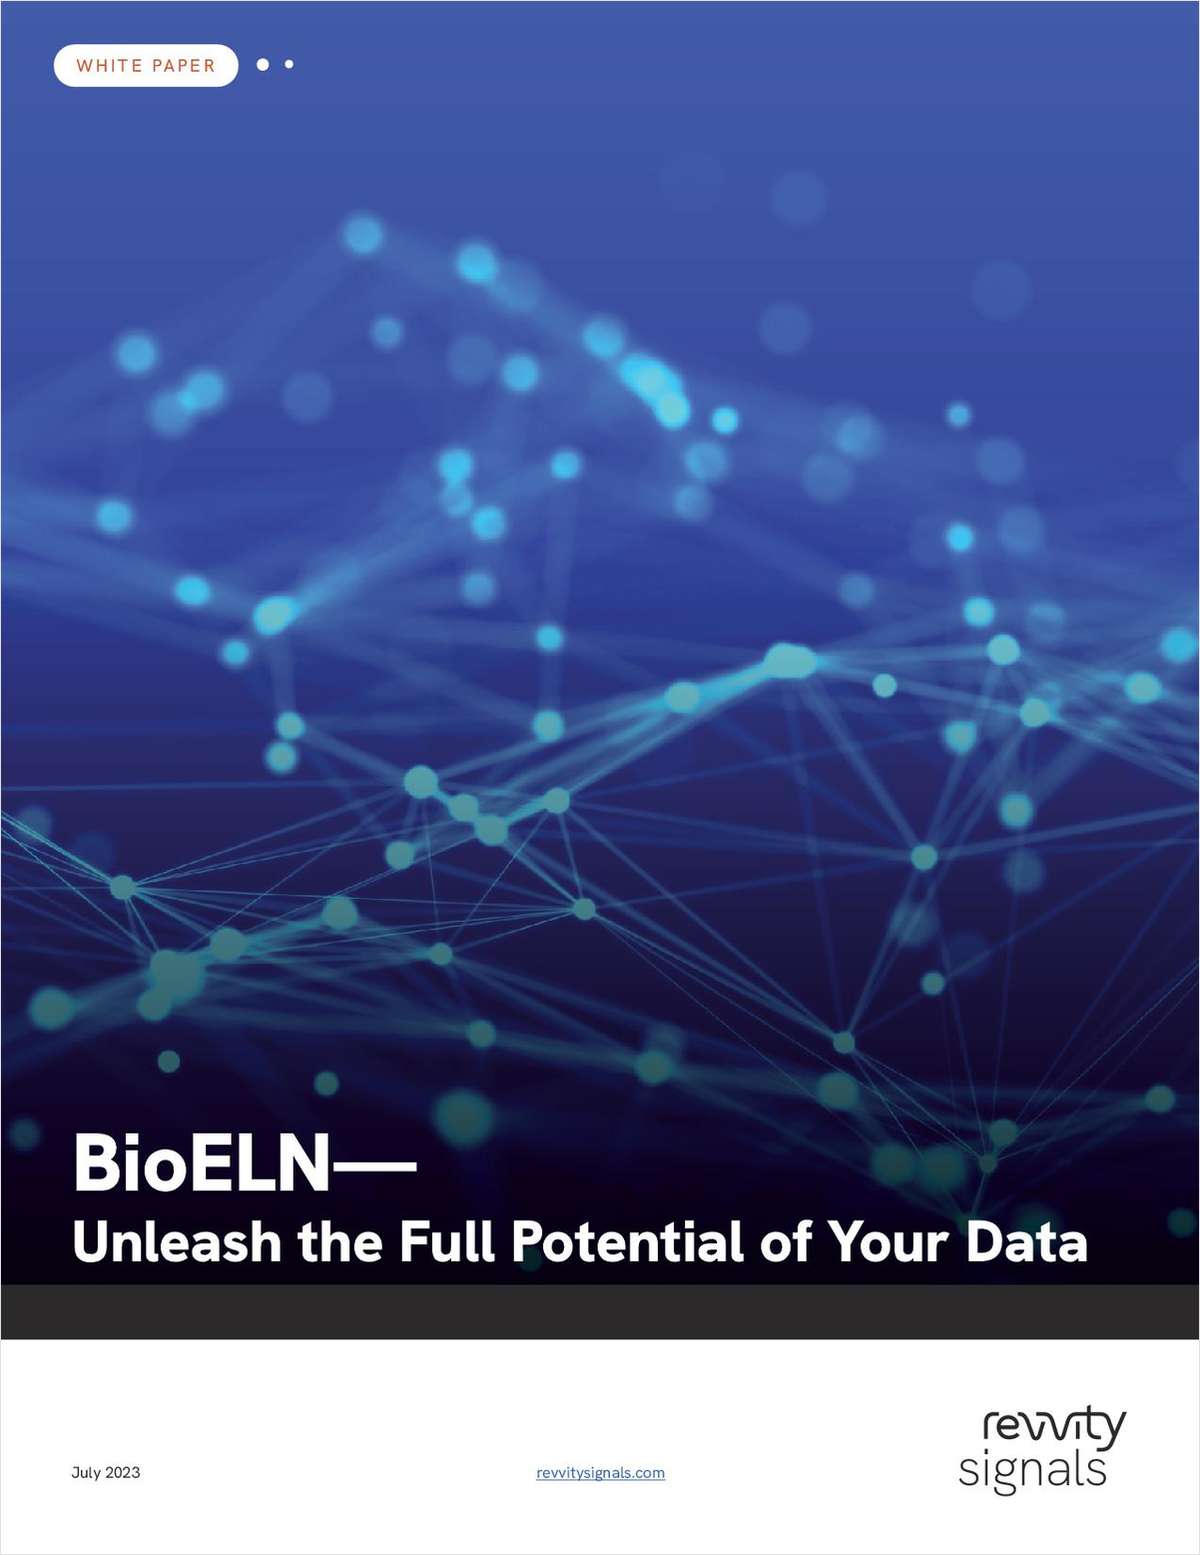 BioELN -- Unleash the Full Potential of Your Data